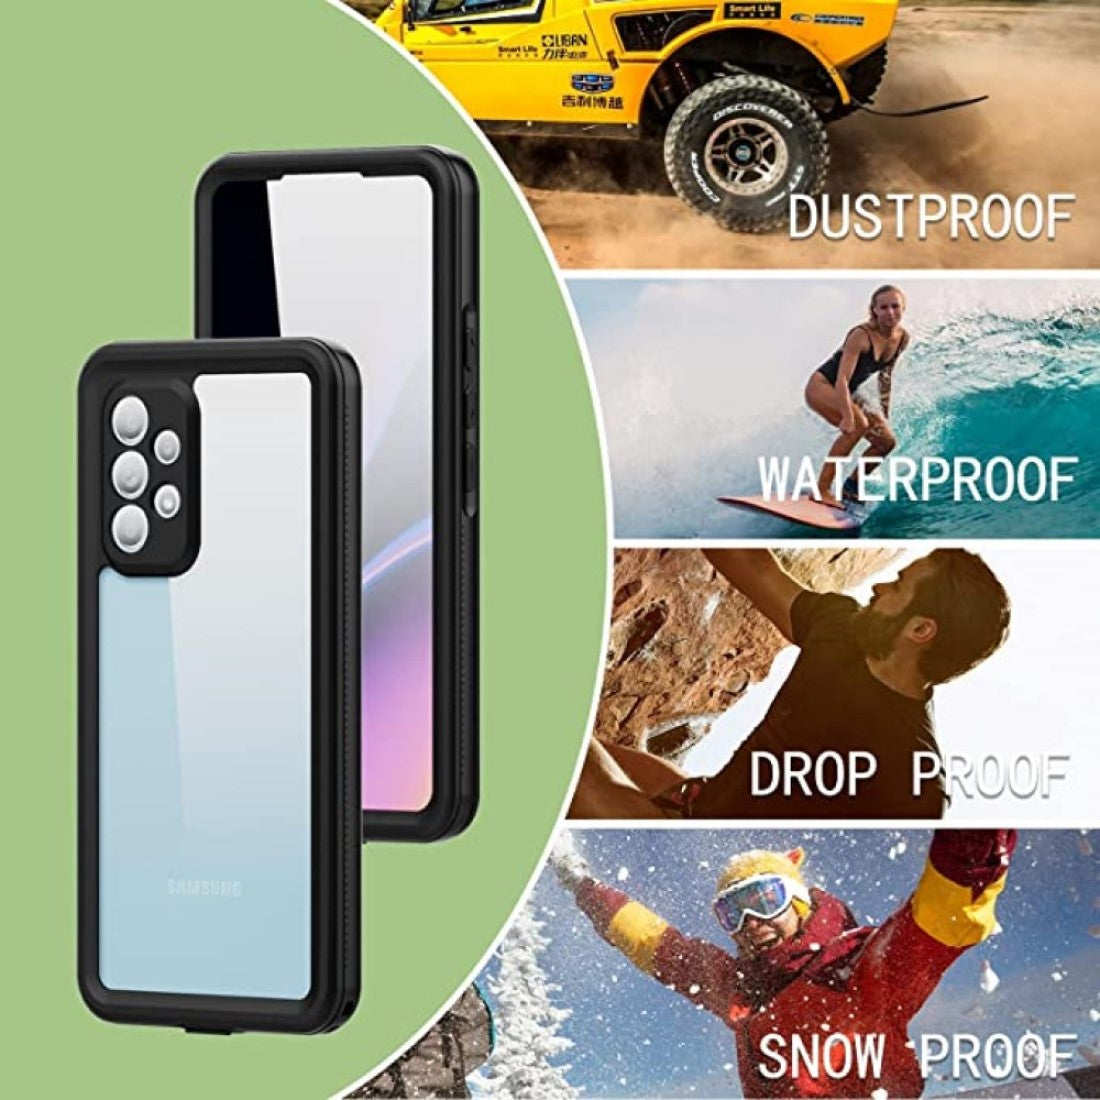 ( Black ) Waterproof Slim Life Proof Case for Samsung S22 Ultra Built-in Screen Protector Shockproof Dustproof Heavy Duty Full Body Protective Case